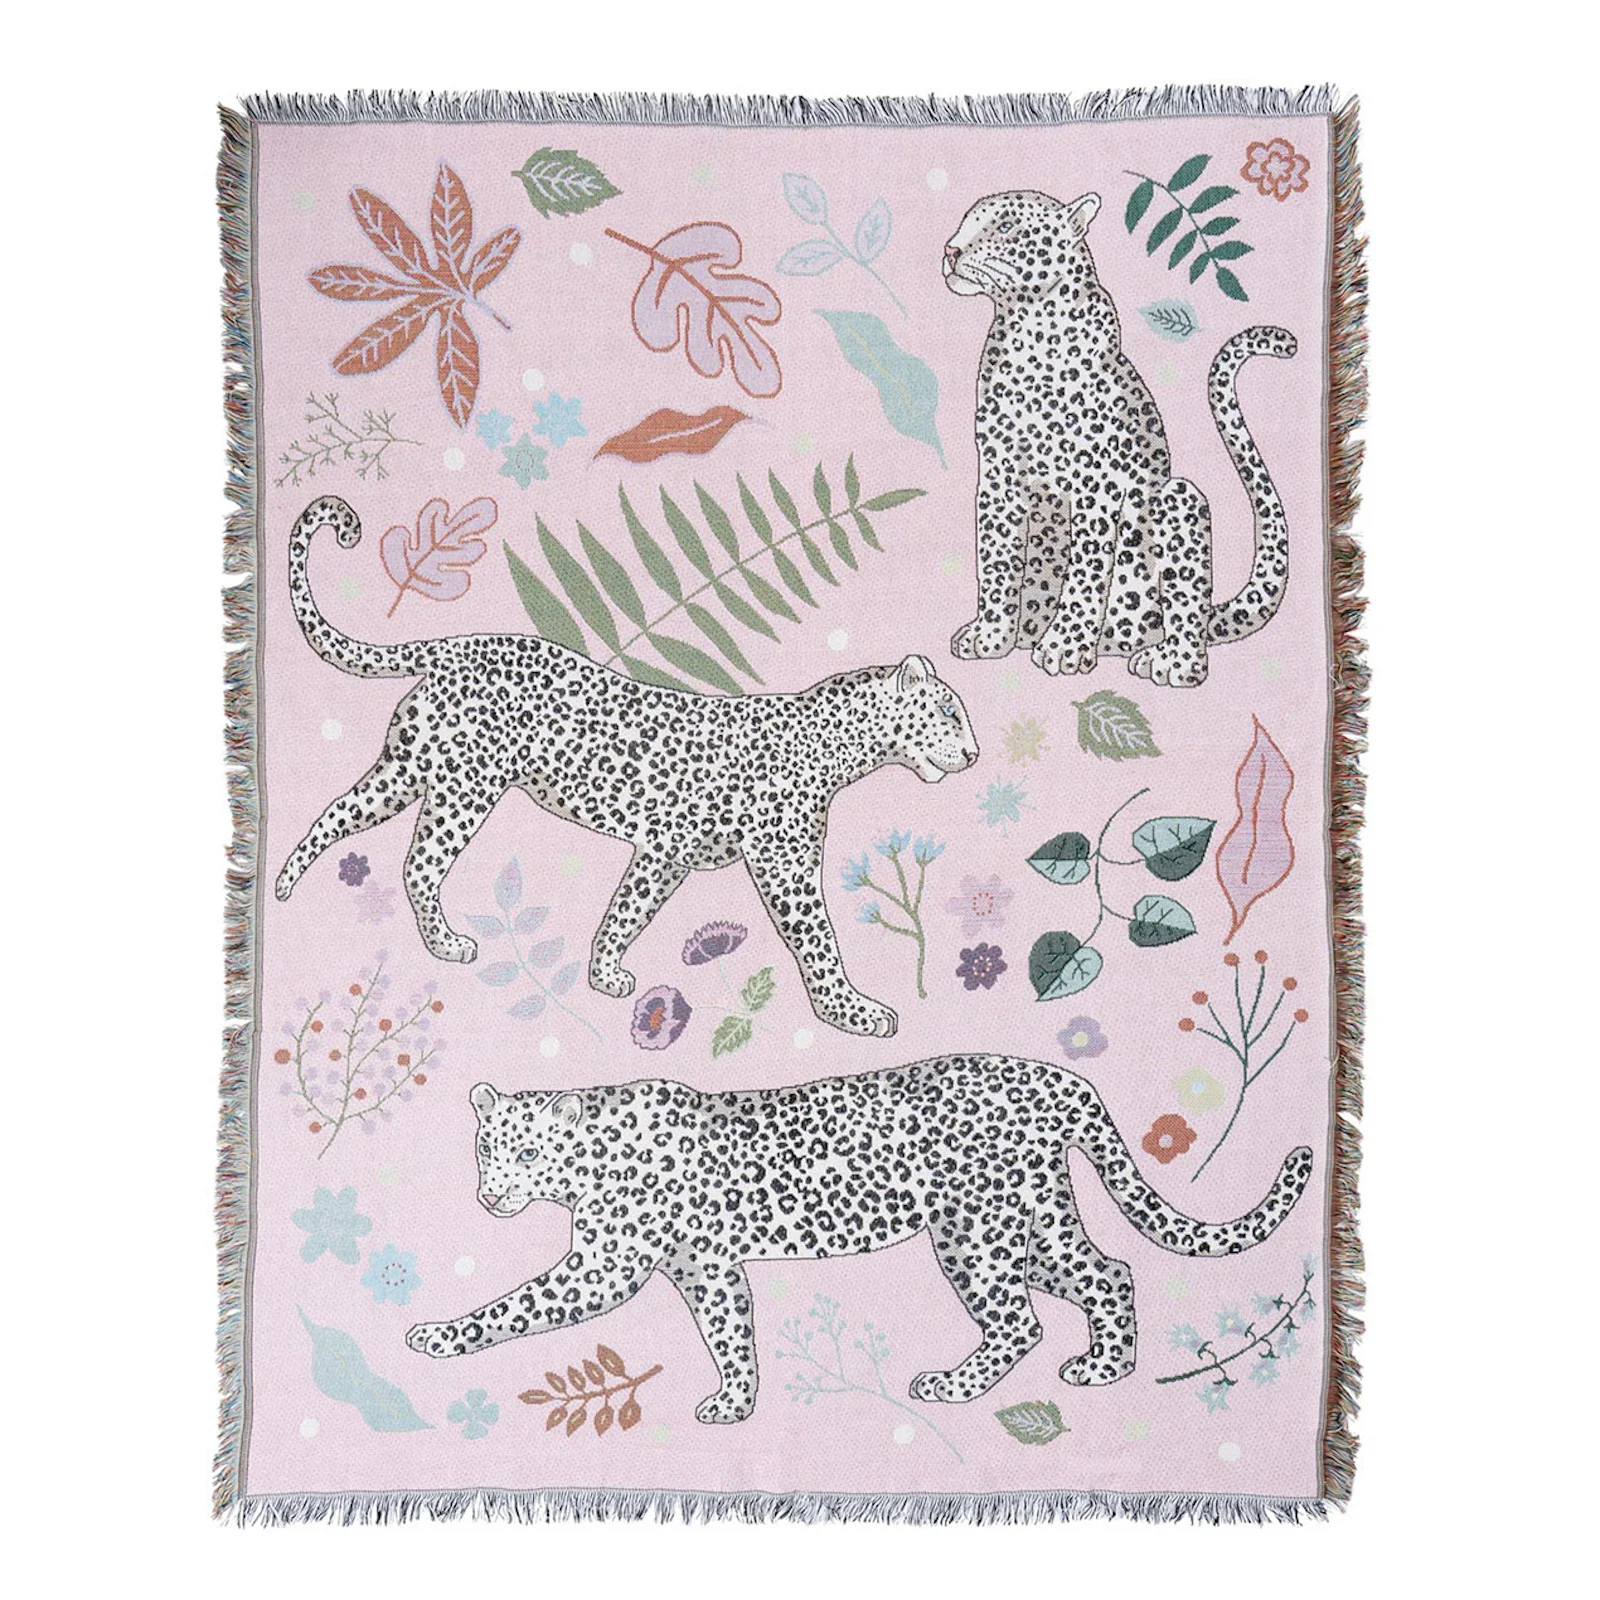 Karen Mabon Snow Leopard Woven Blanket - Pink - 138x178cm Image 1